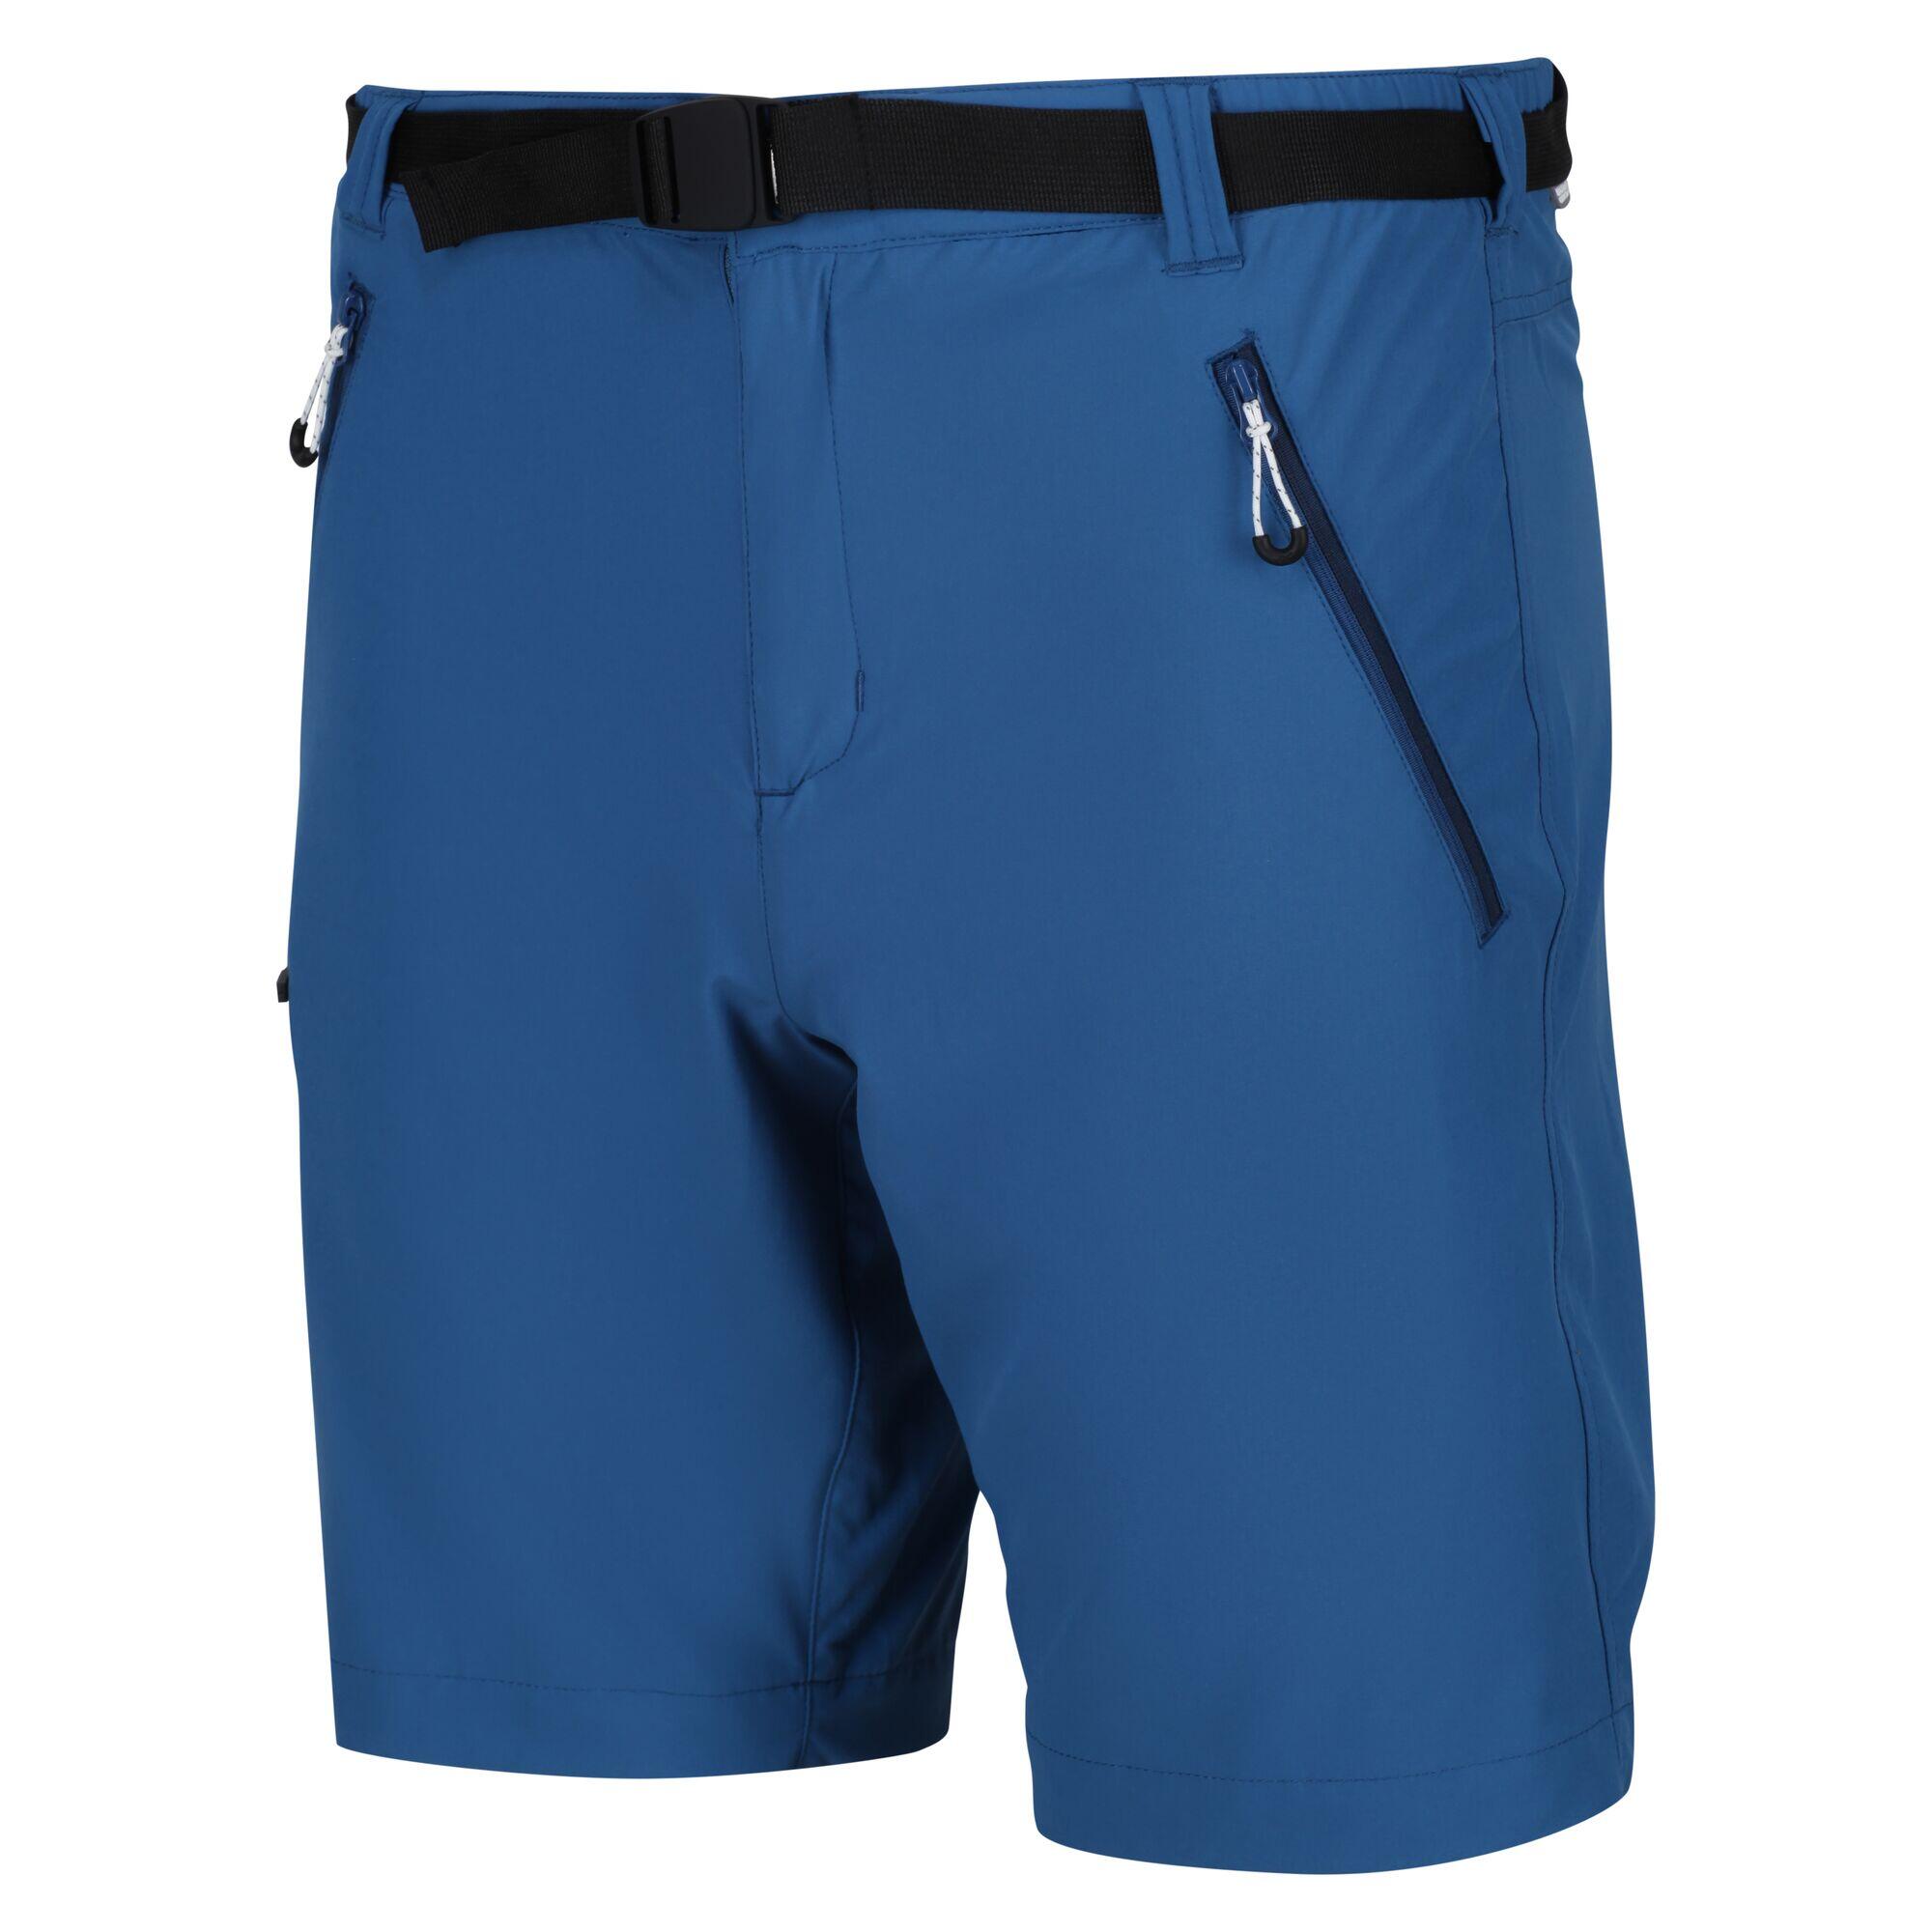 Xert Stretch III Men's Hiking Shorts - Dynasty Blue 4/6